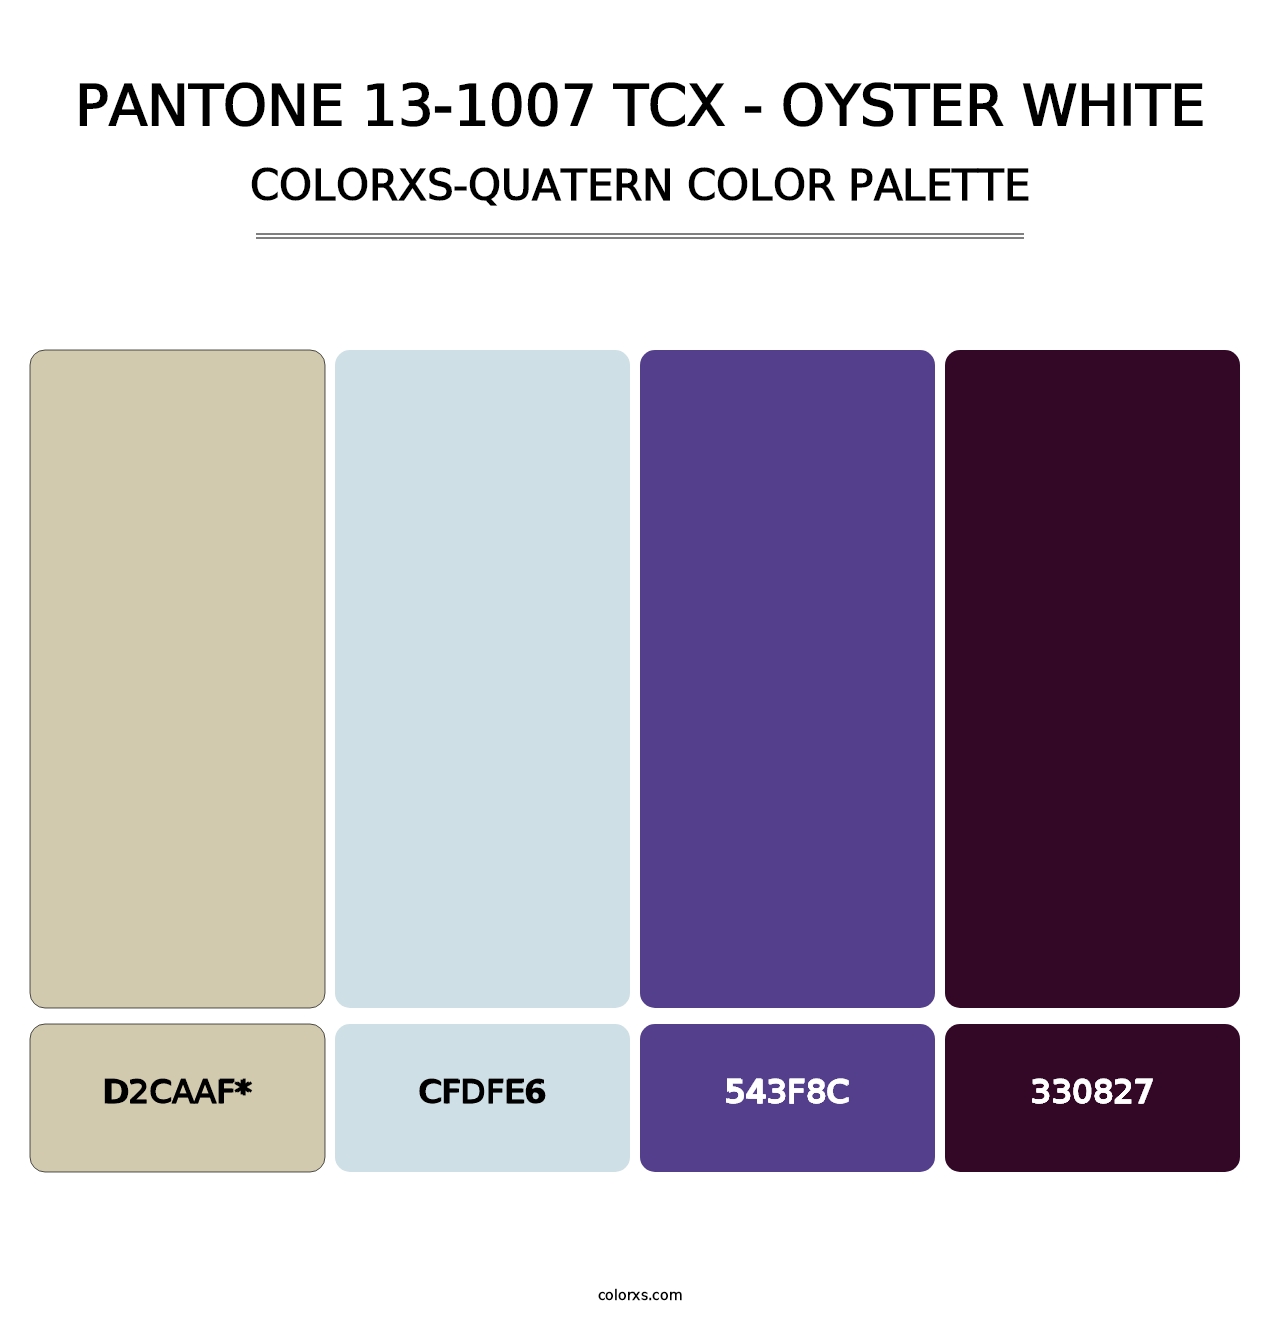 PANTONE 13-1007 TCX - Oyster White - Colorxs Quatern Palette